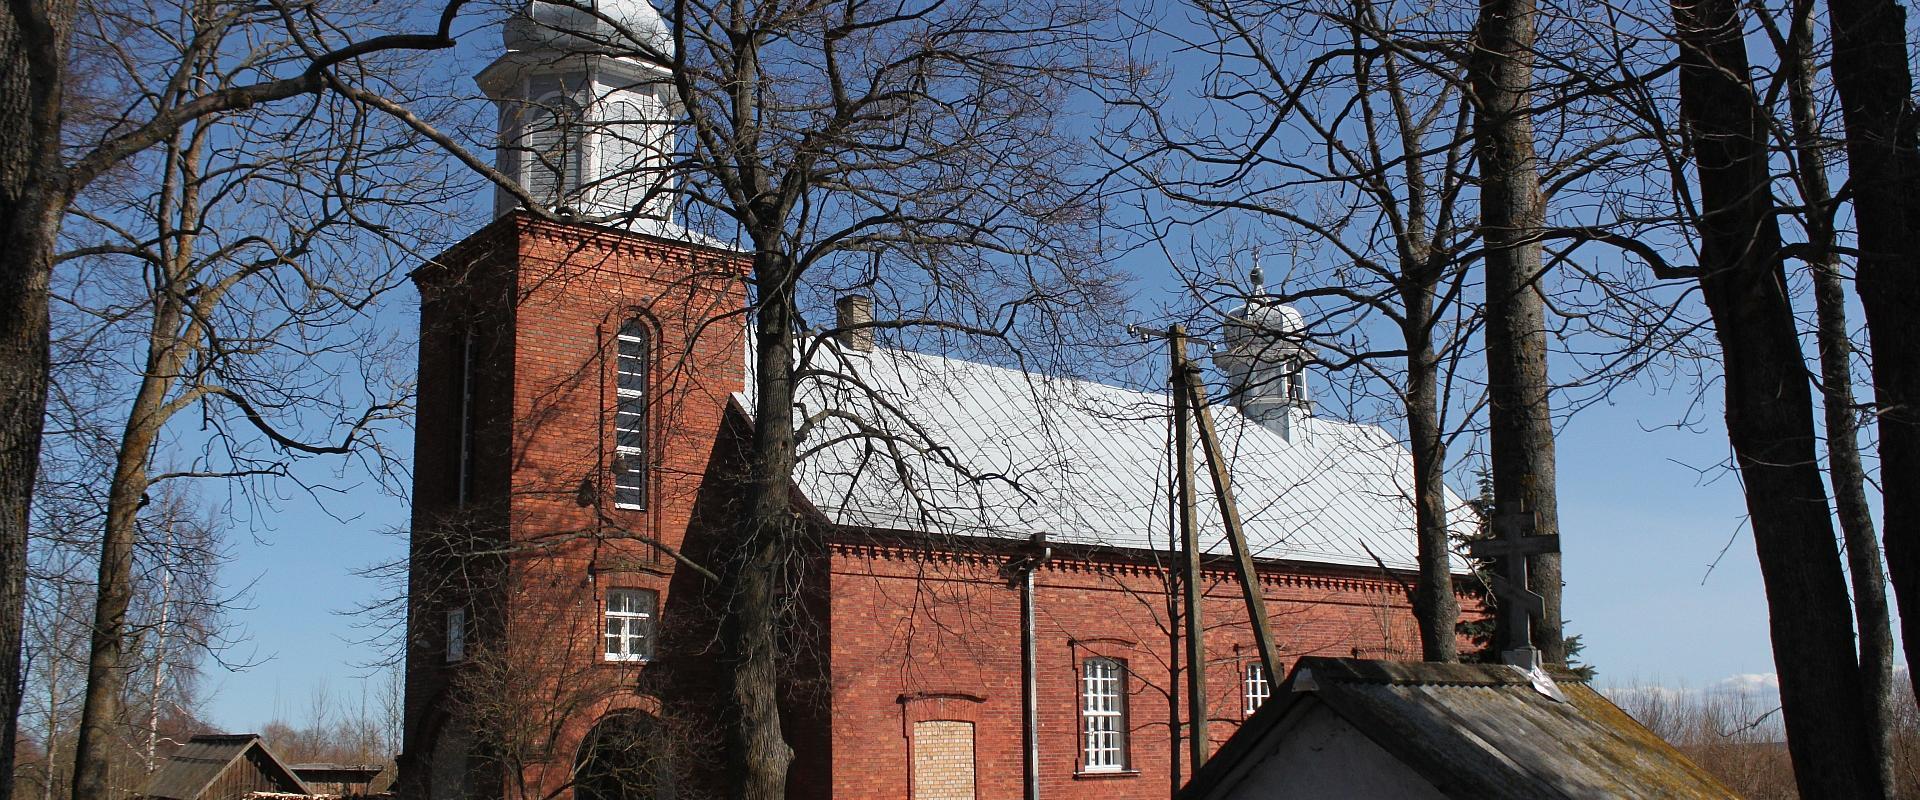 Varnja Old Believers Prayer House of the Estonian Association of Old Believers Congregations